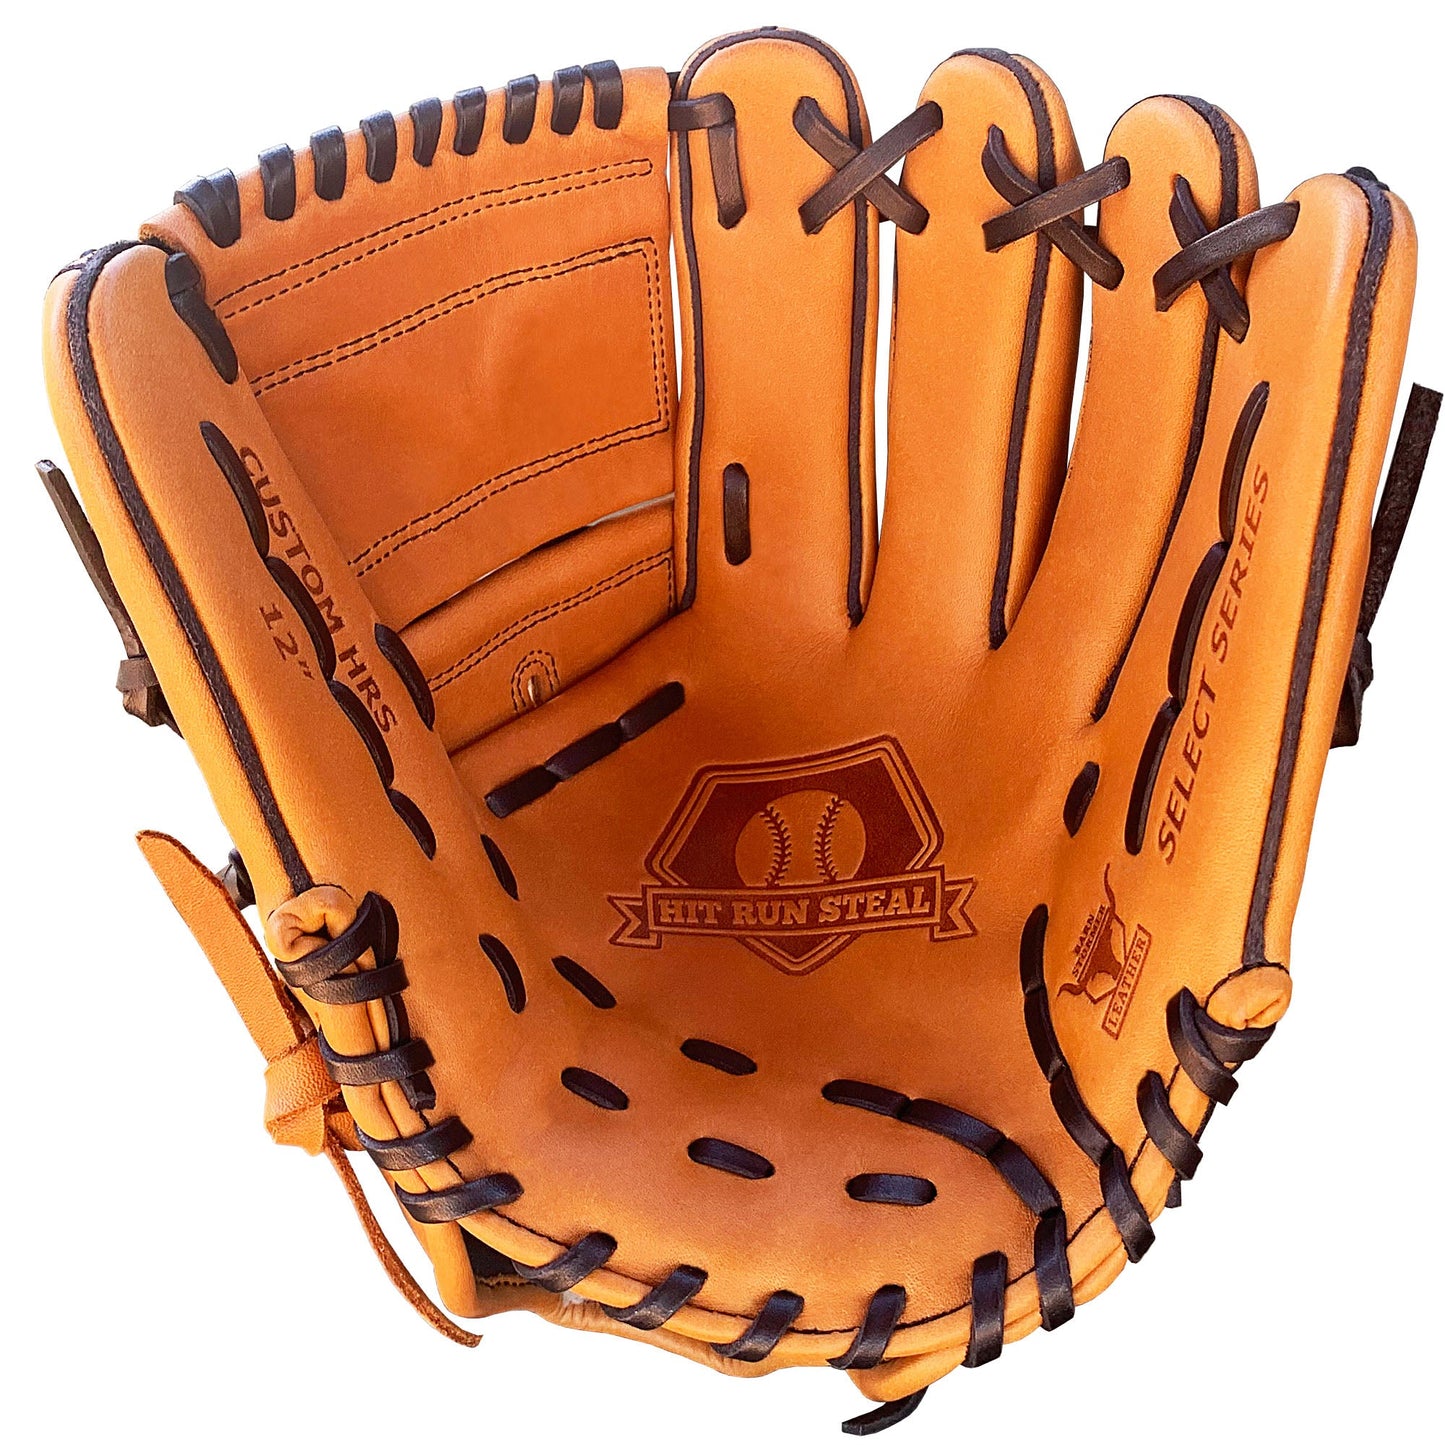 Tan leather baseball pitchers glove